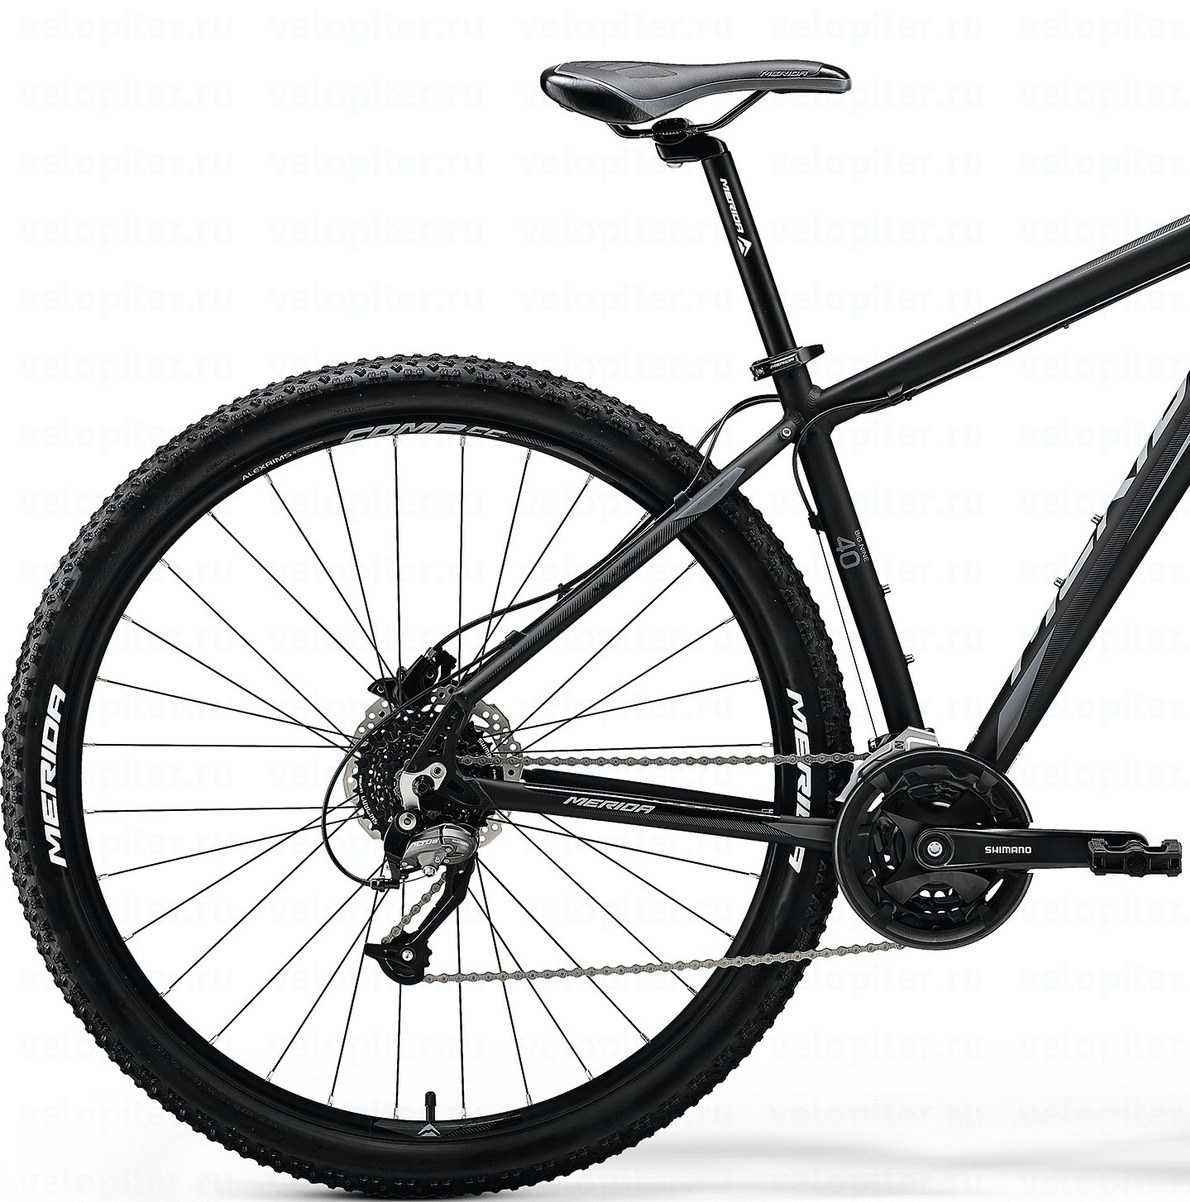 Технические характеристики и цена велосипеда мерида биг севен